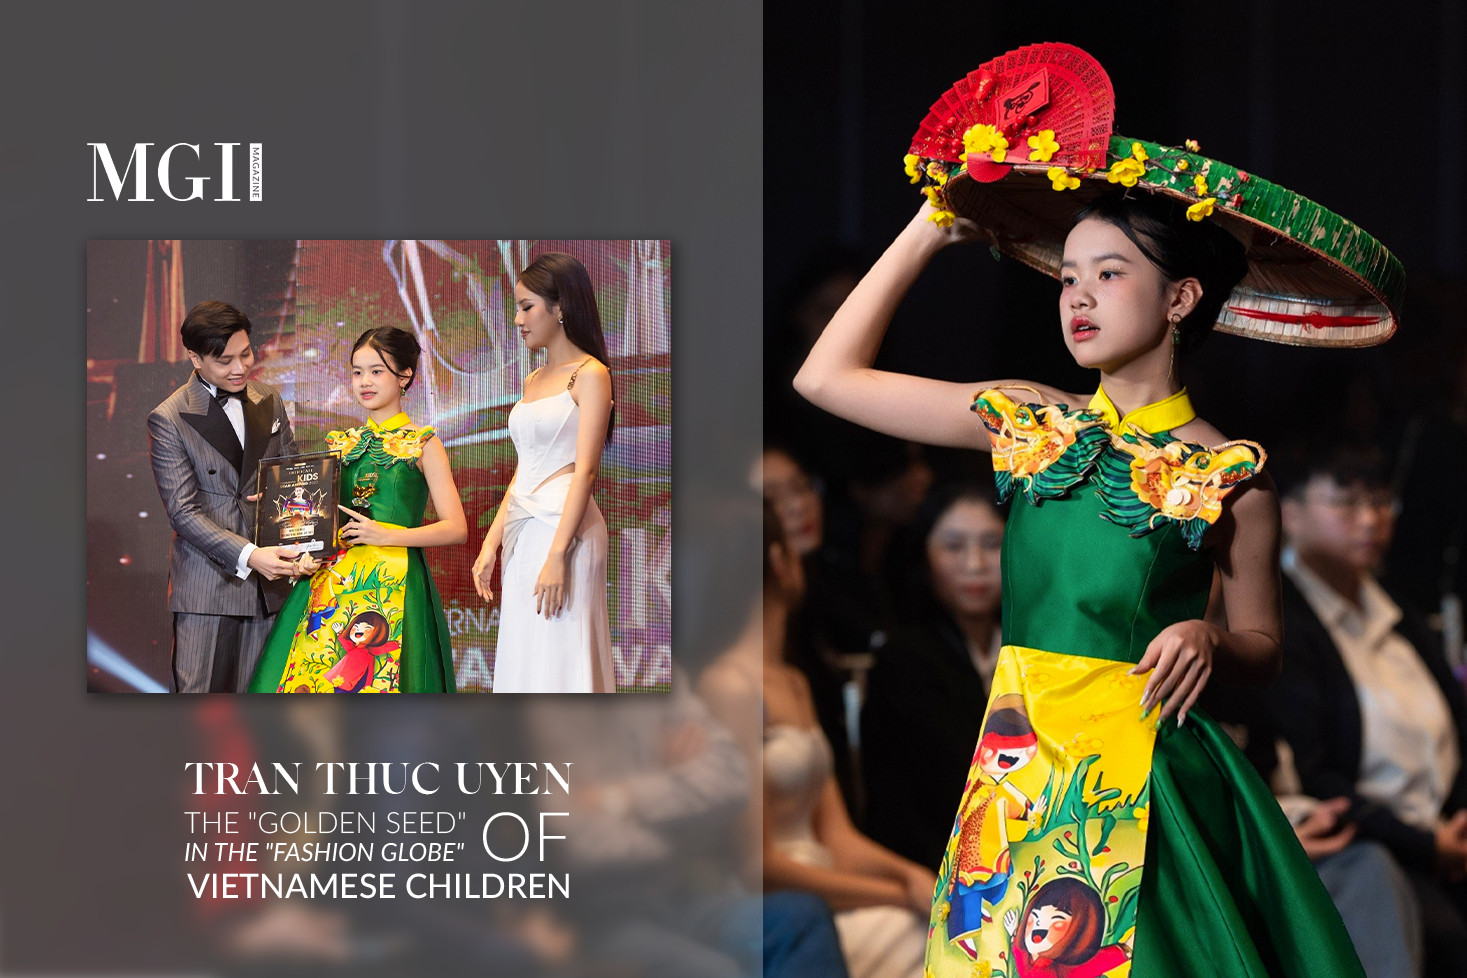 Tran Thuc Uyen - the "golden seed" in Vietnamese children's fashion field